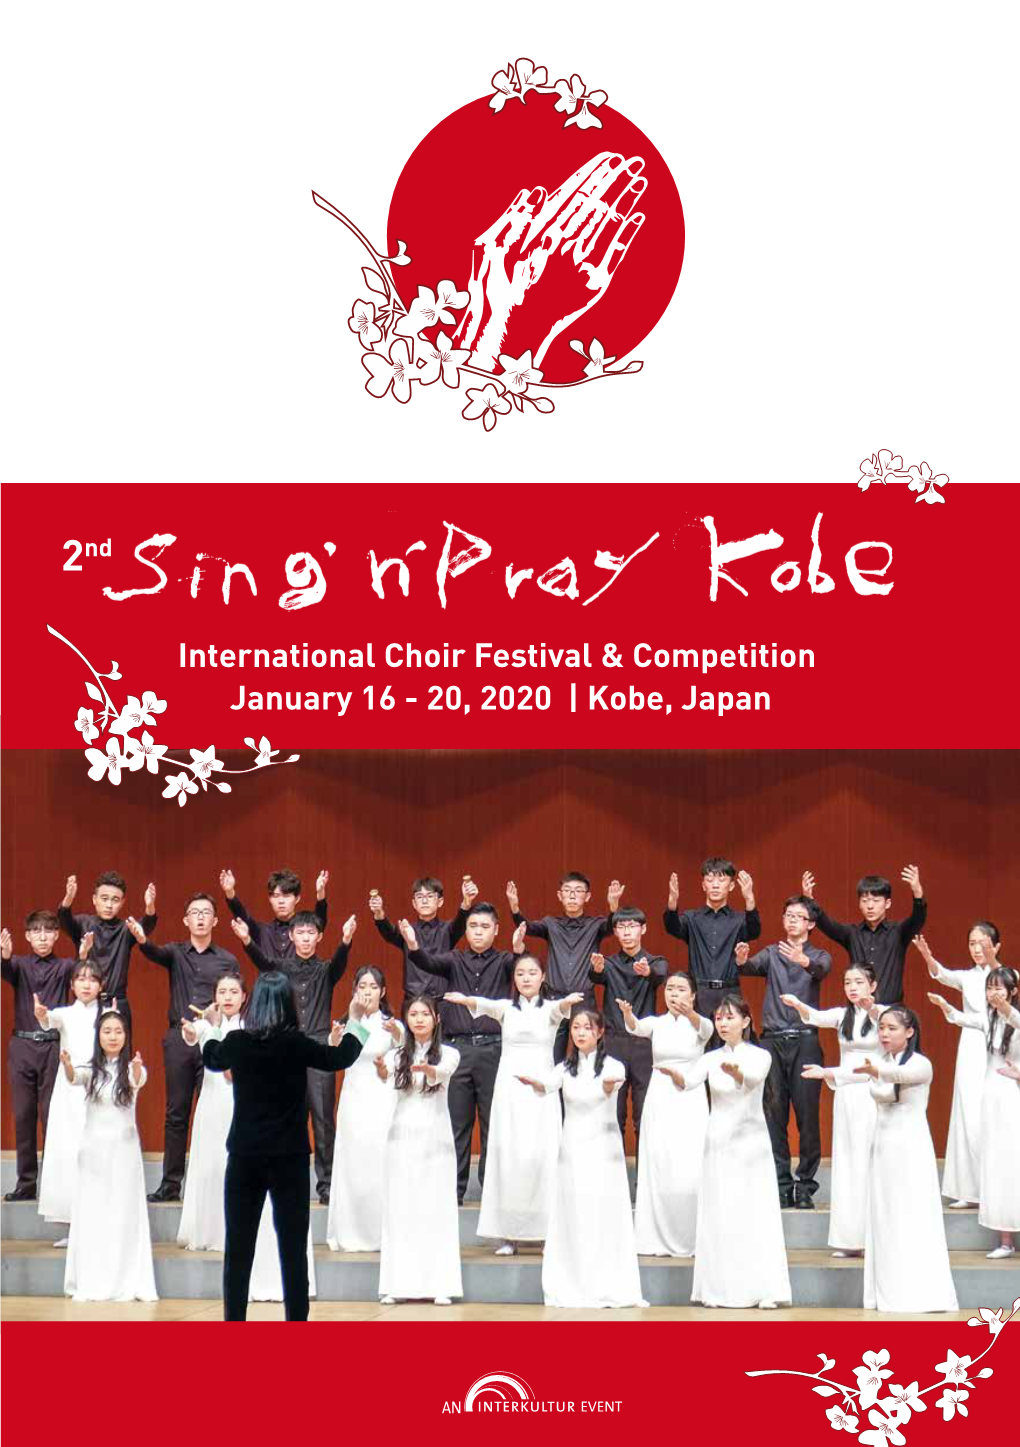 International Choir Festival & Competition January 16